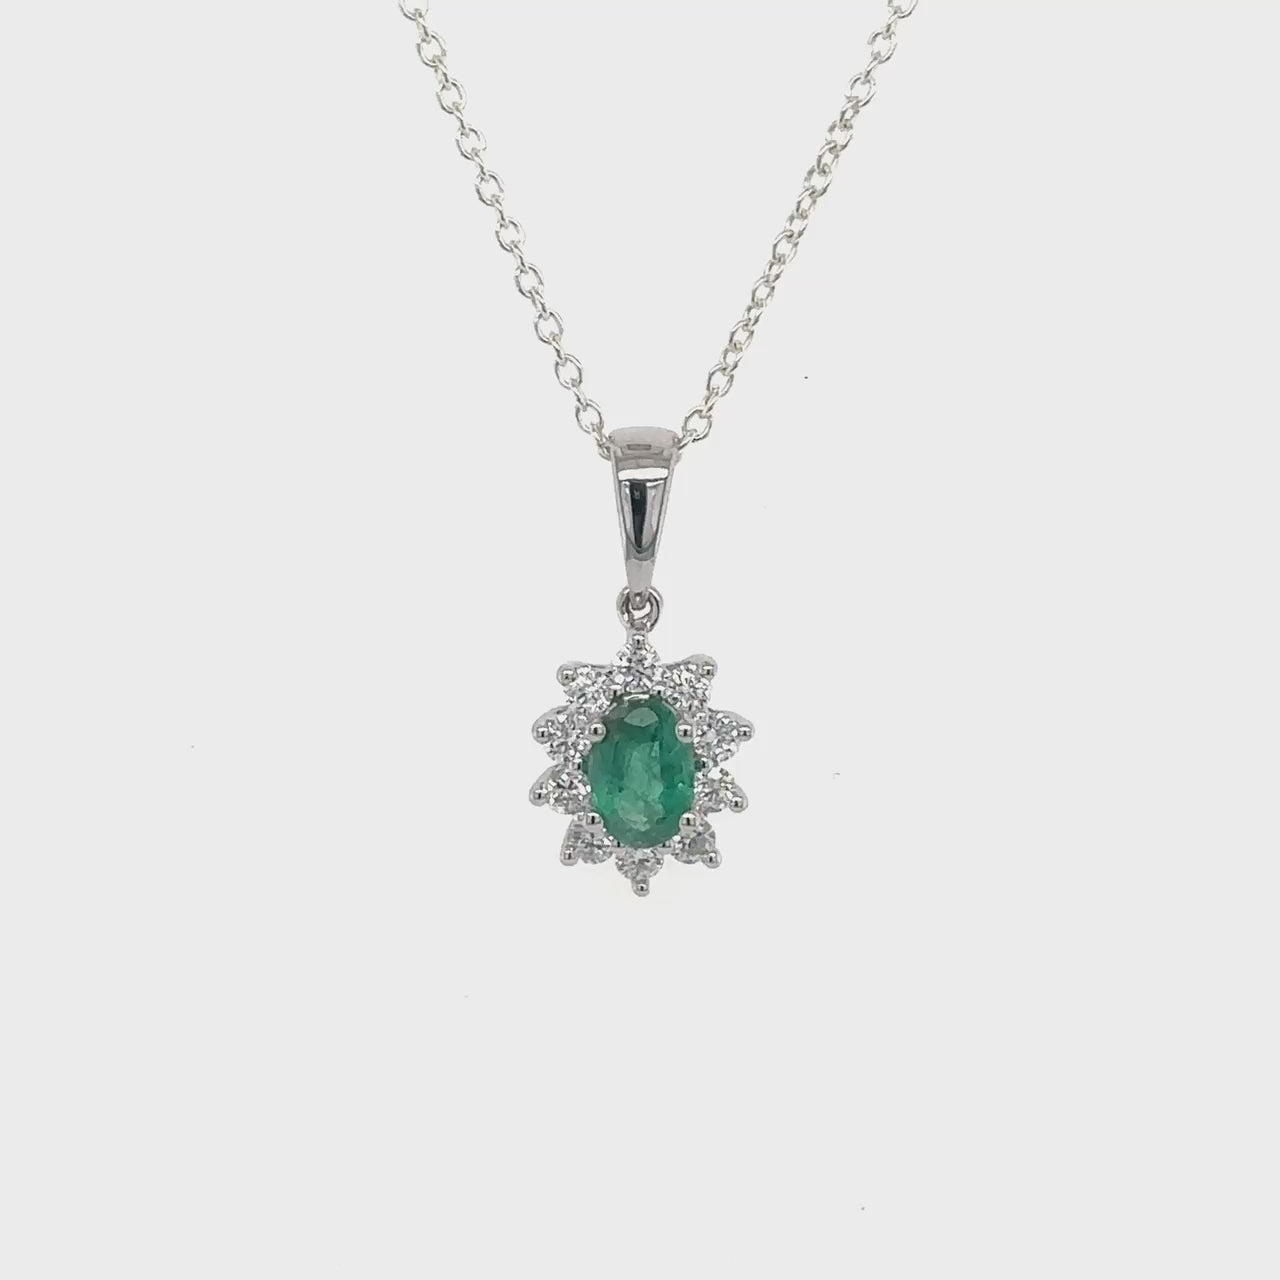  Oval emerald pendant, halo diamond pendant, jewelry with emerald gemstone, necklace with diamond halo, luxurious emerald and diamond accessory, elegant pendant with oval emerald and diamond halo, emerald and diamond pendant for formal occasions.